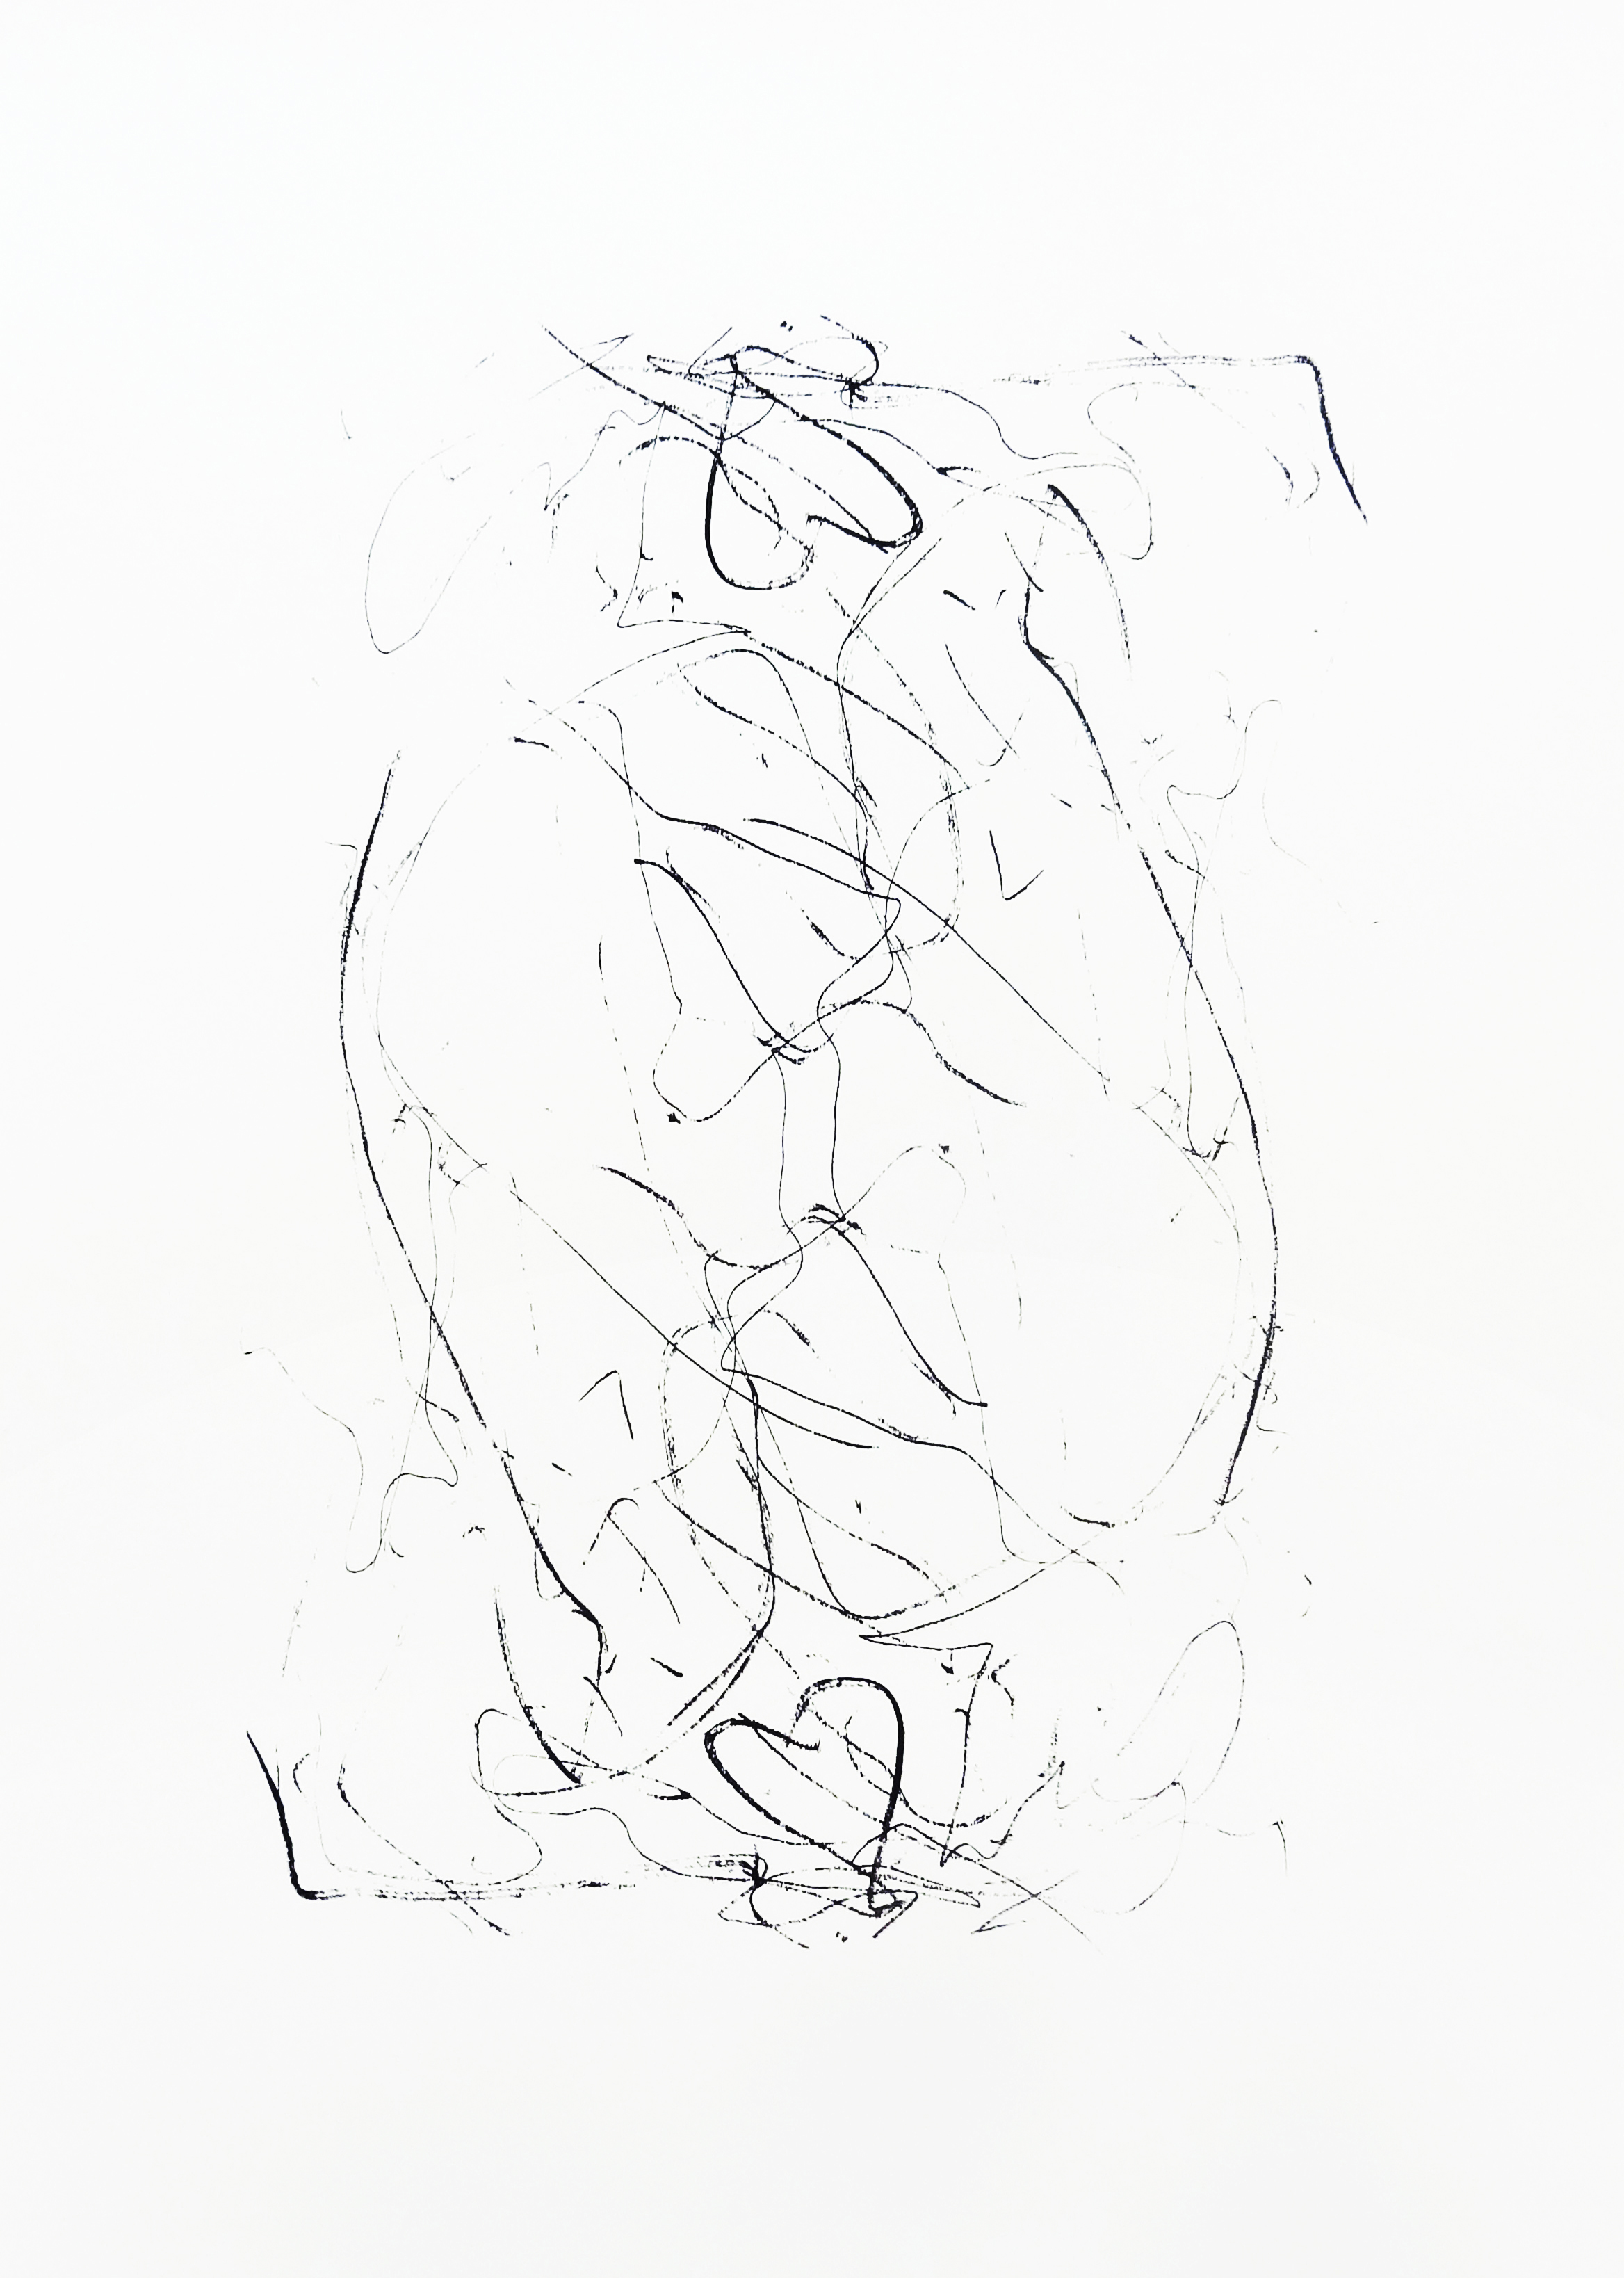  Untitled, 2015 acrylic on paper one-off screenprint 42,0 x 29,7 cm (6-15) 